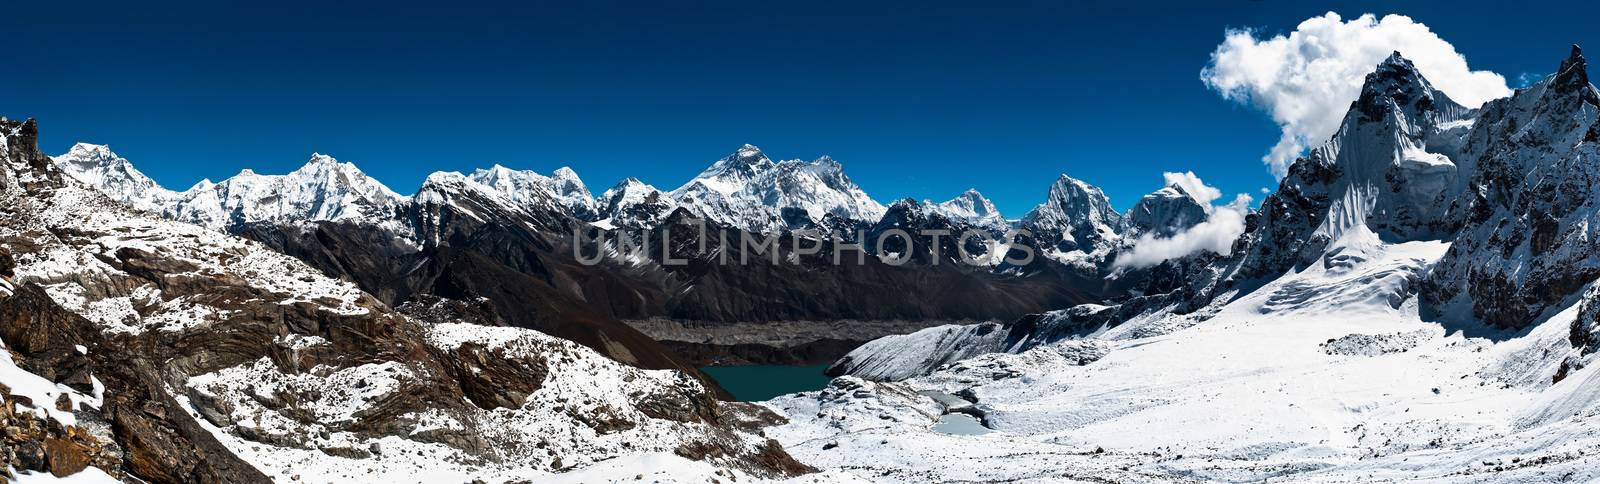 Panoramic view of Himalaya peaks: Everest, Lhotse, Nuptse and ot by Arsgera